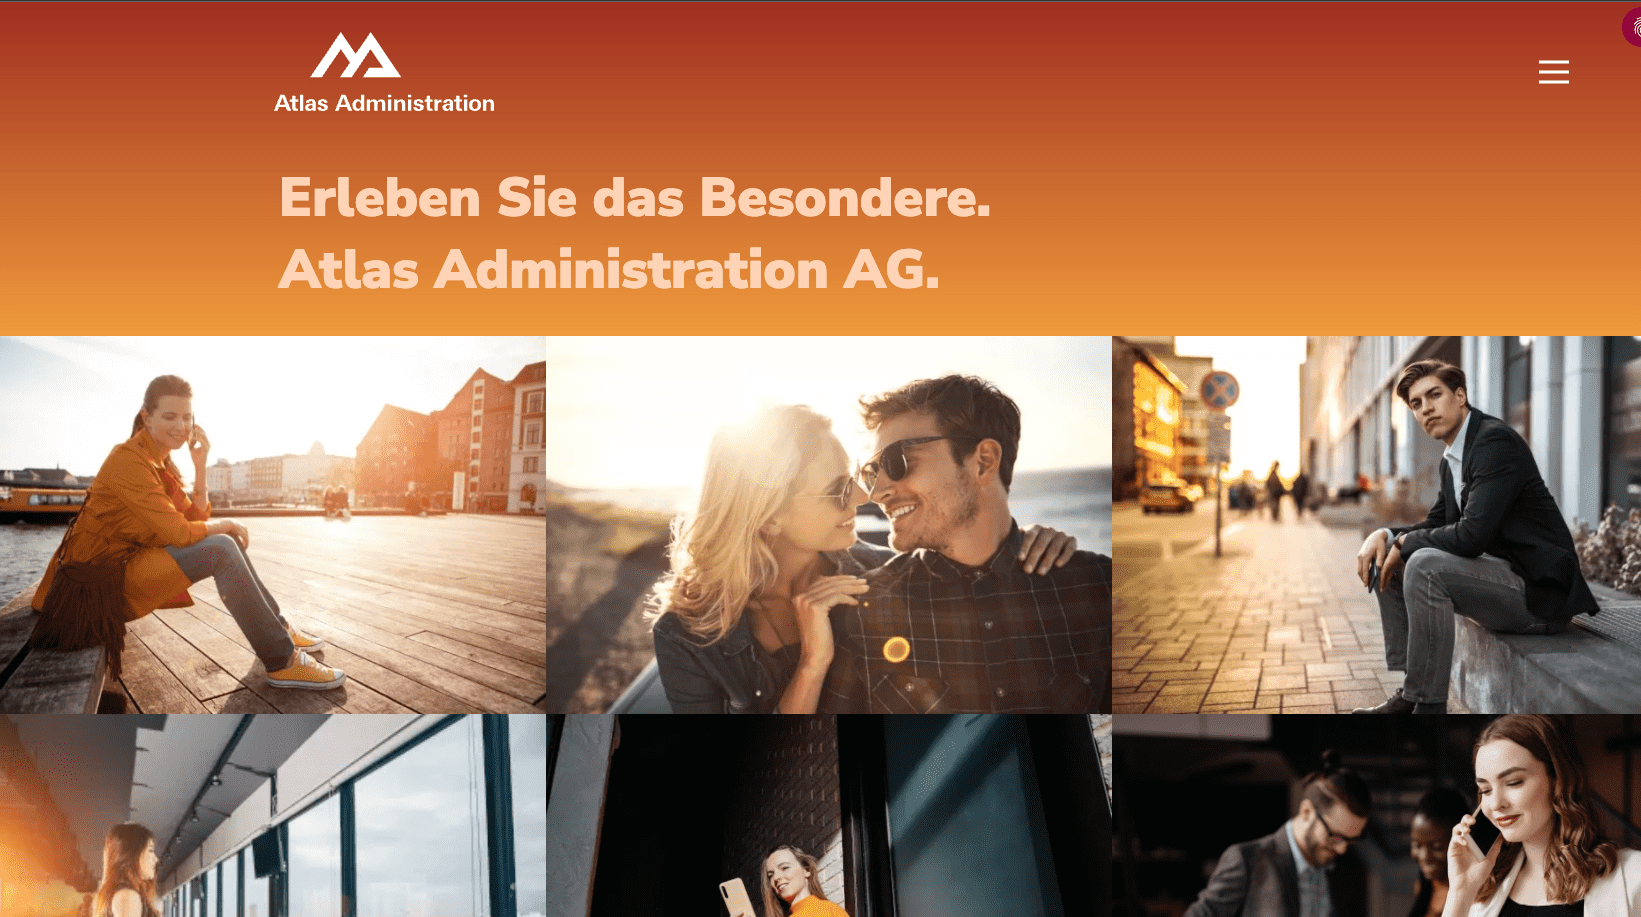 Atlas Administration AG